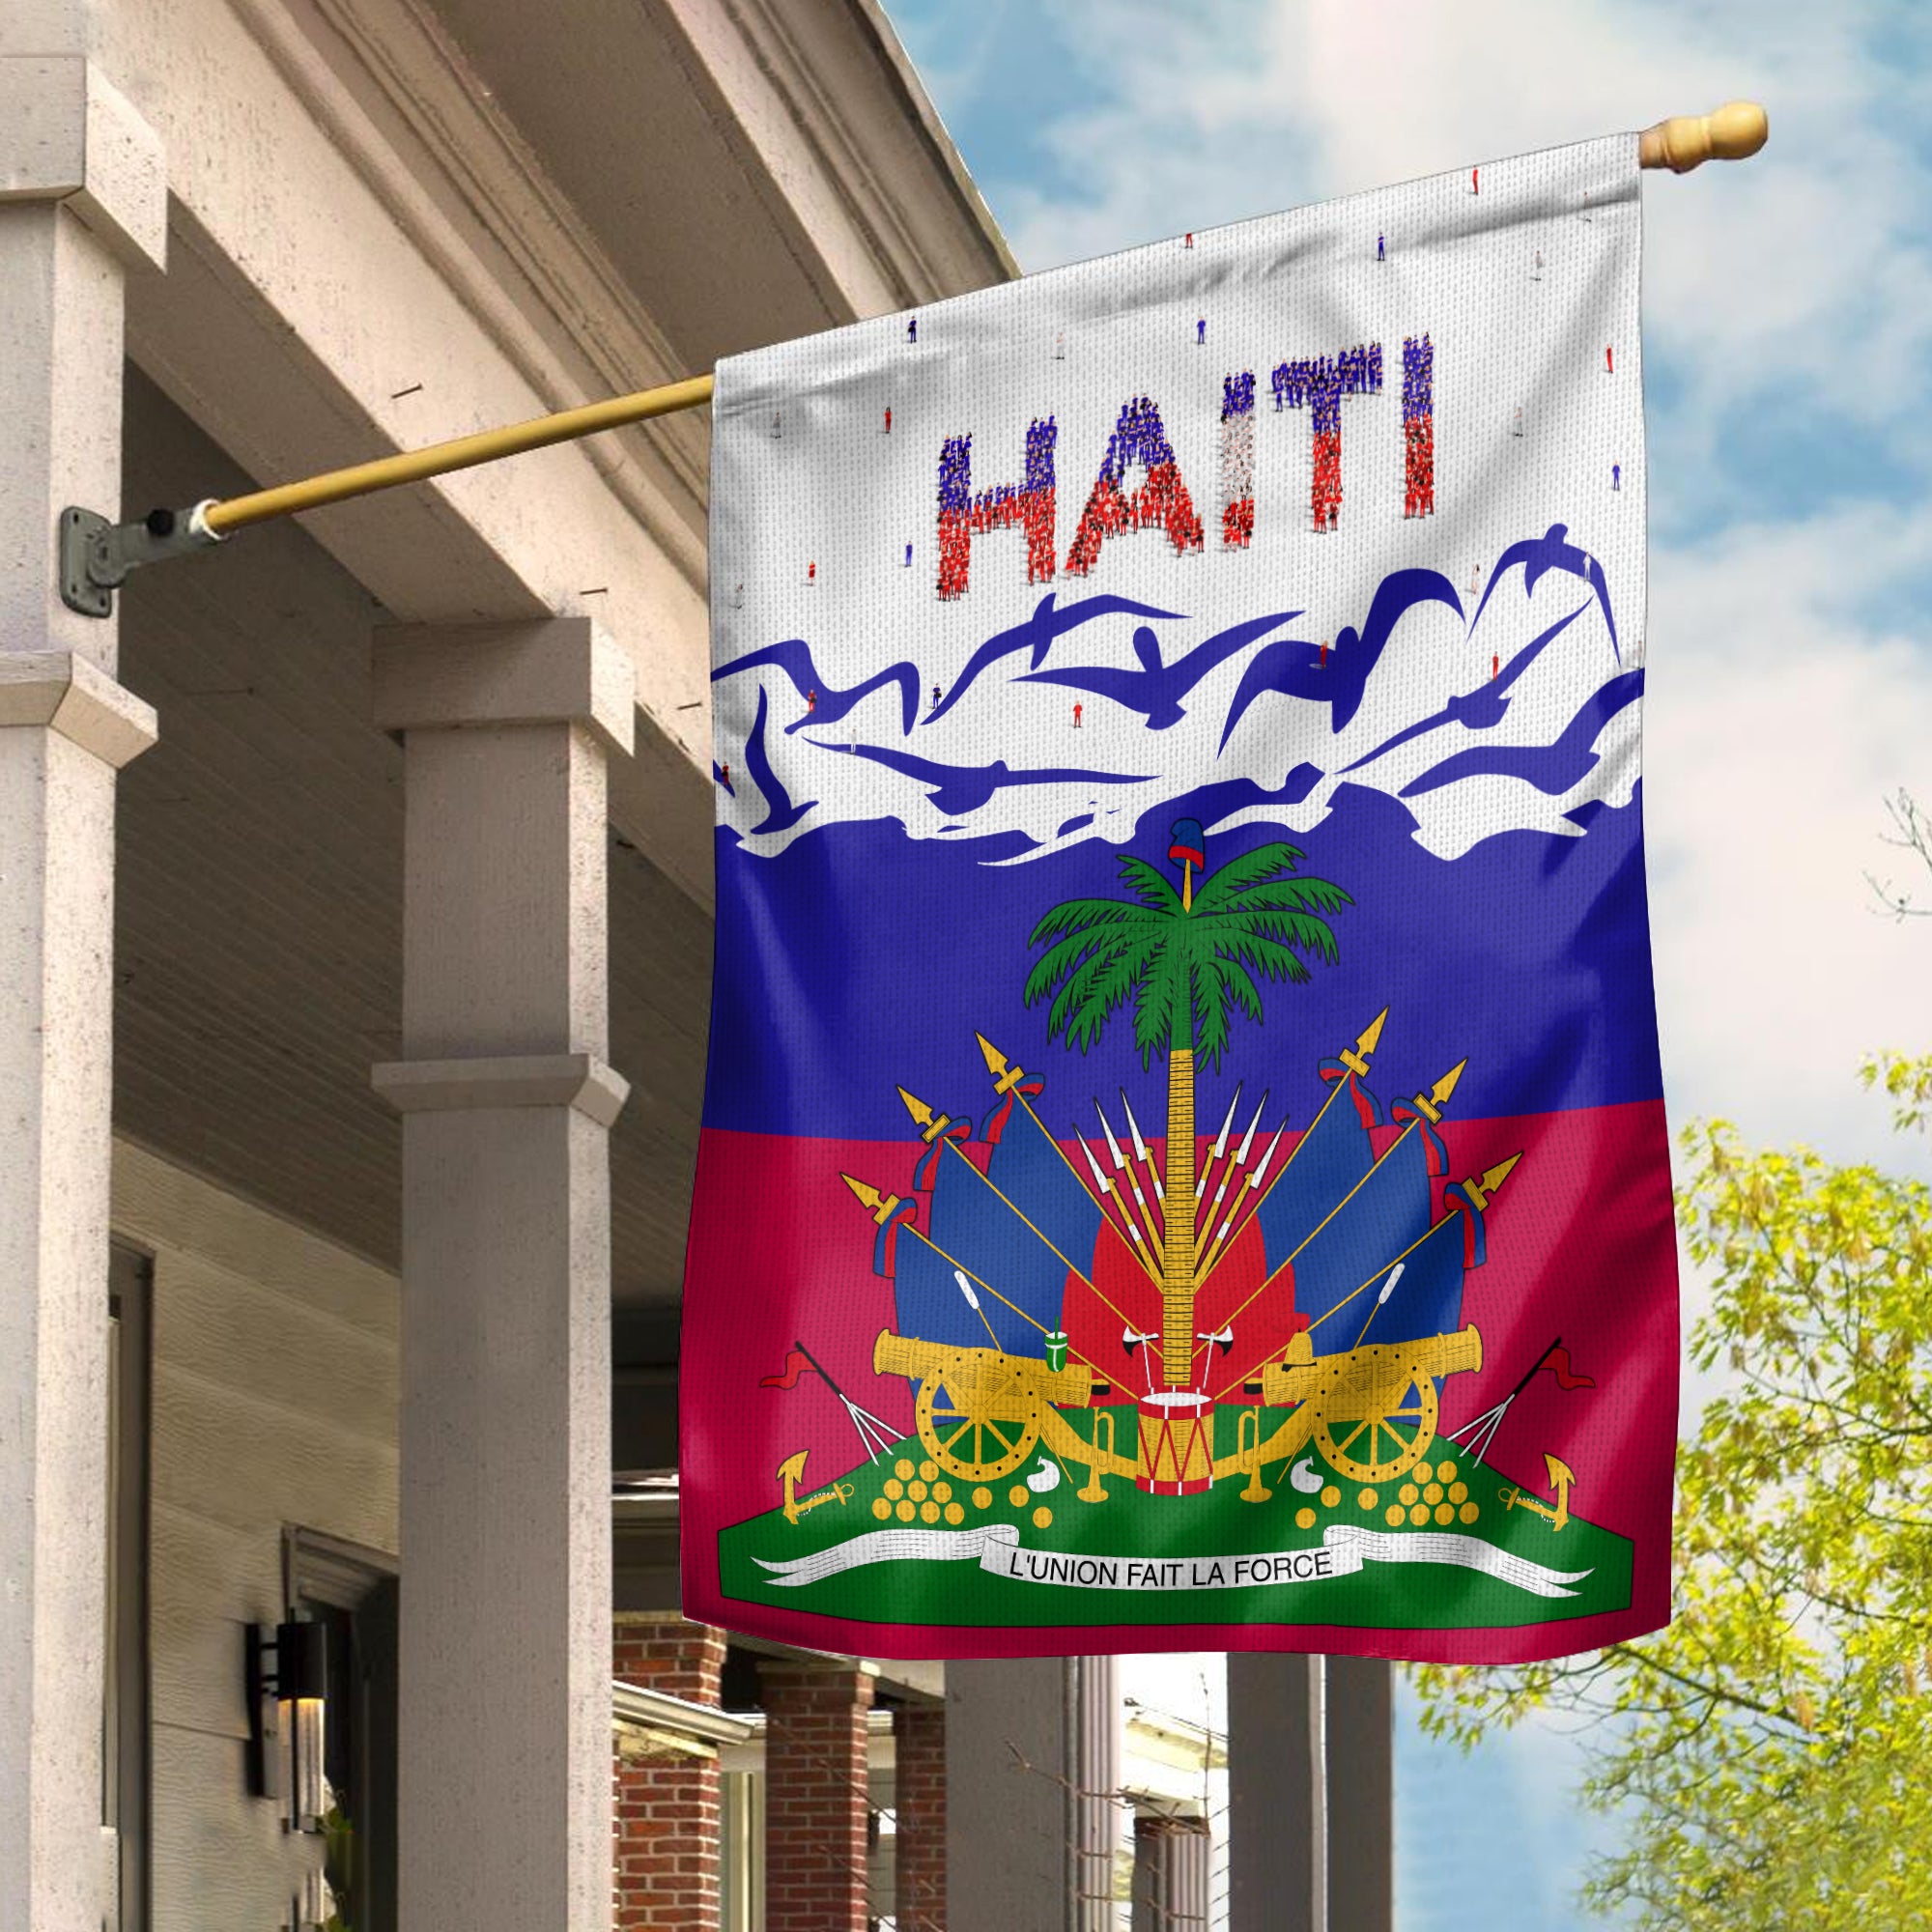 Haiti Happy Independence Day 